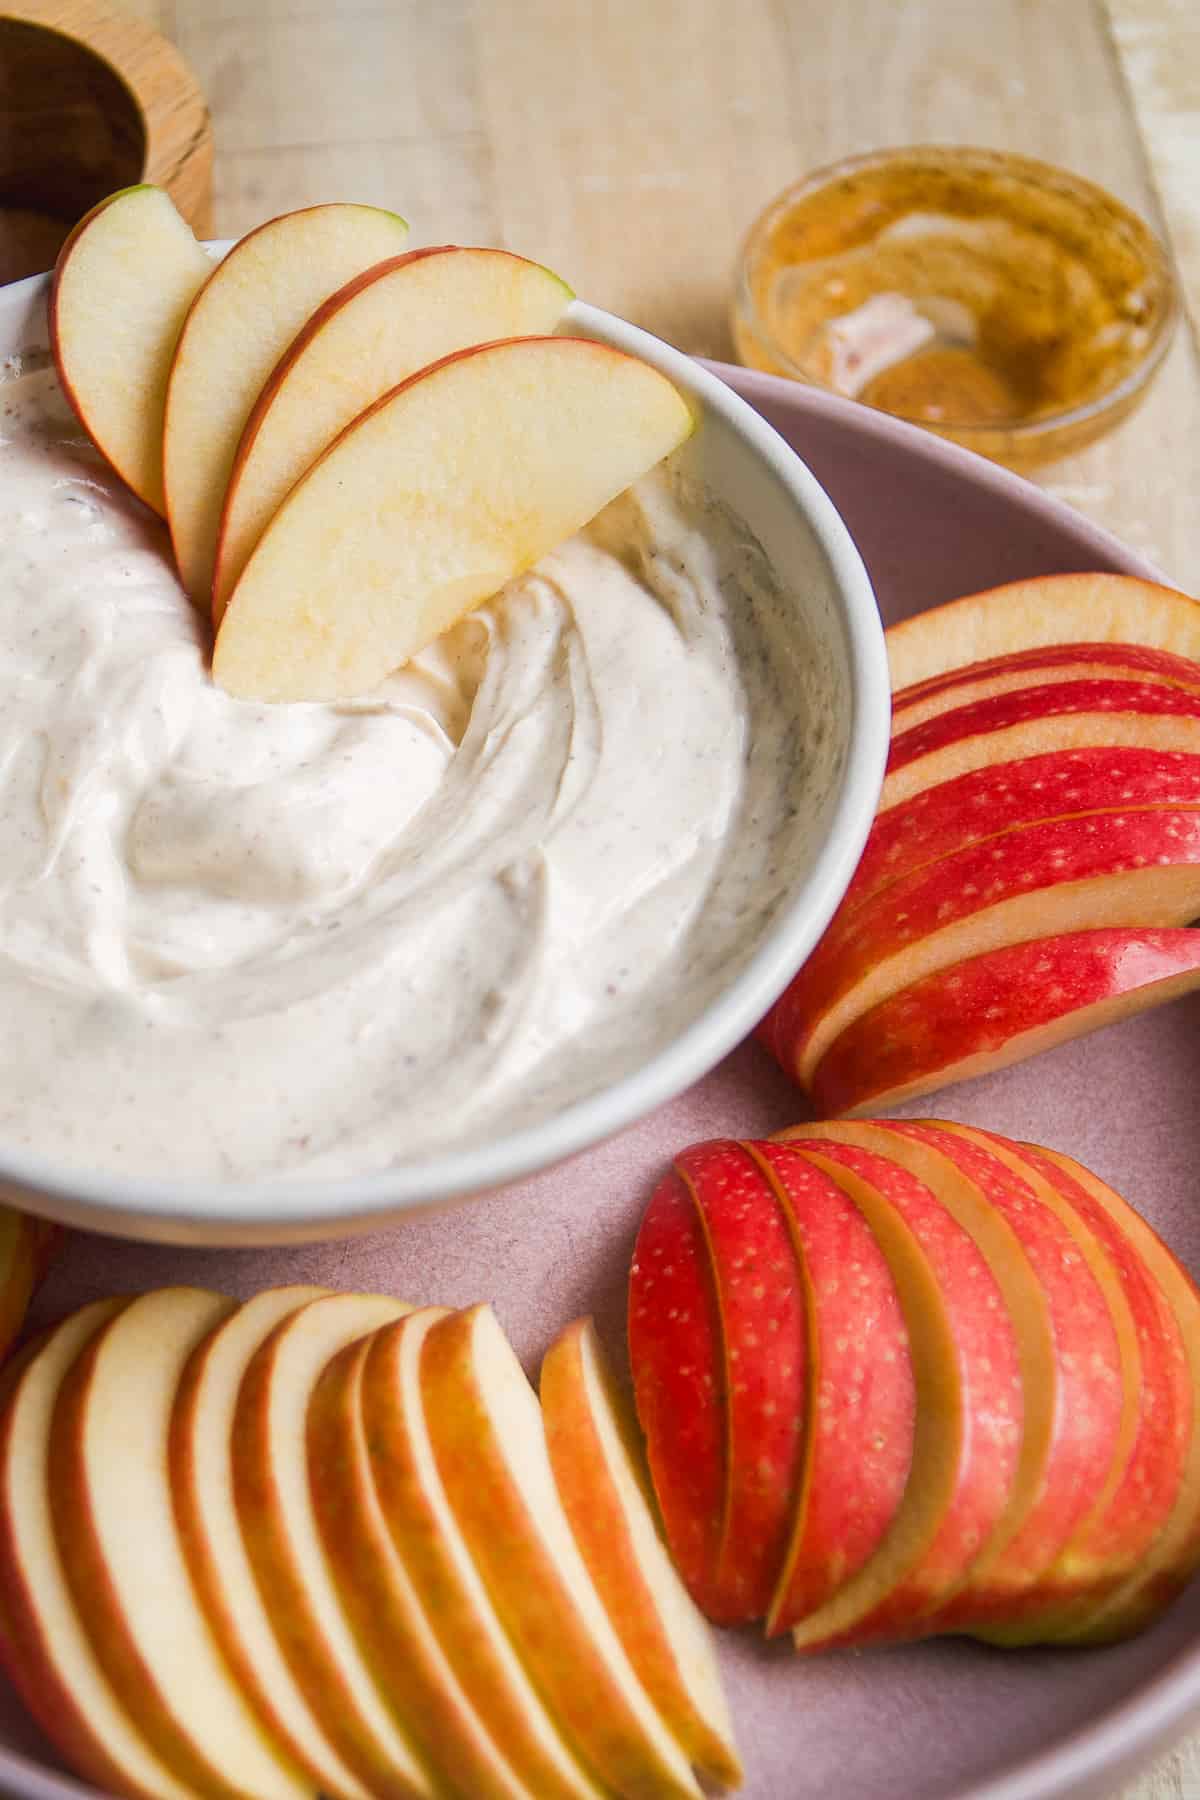 Yogurt fruit dip with apple slices on the side.